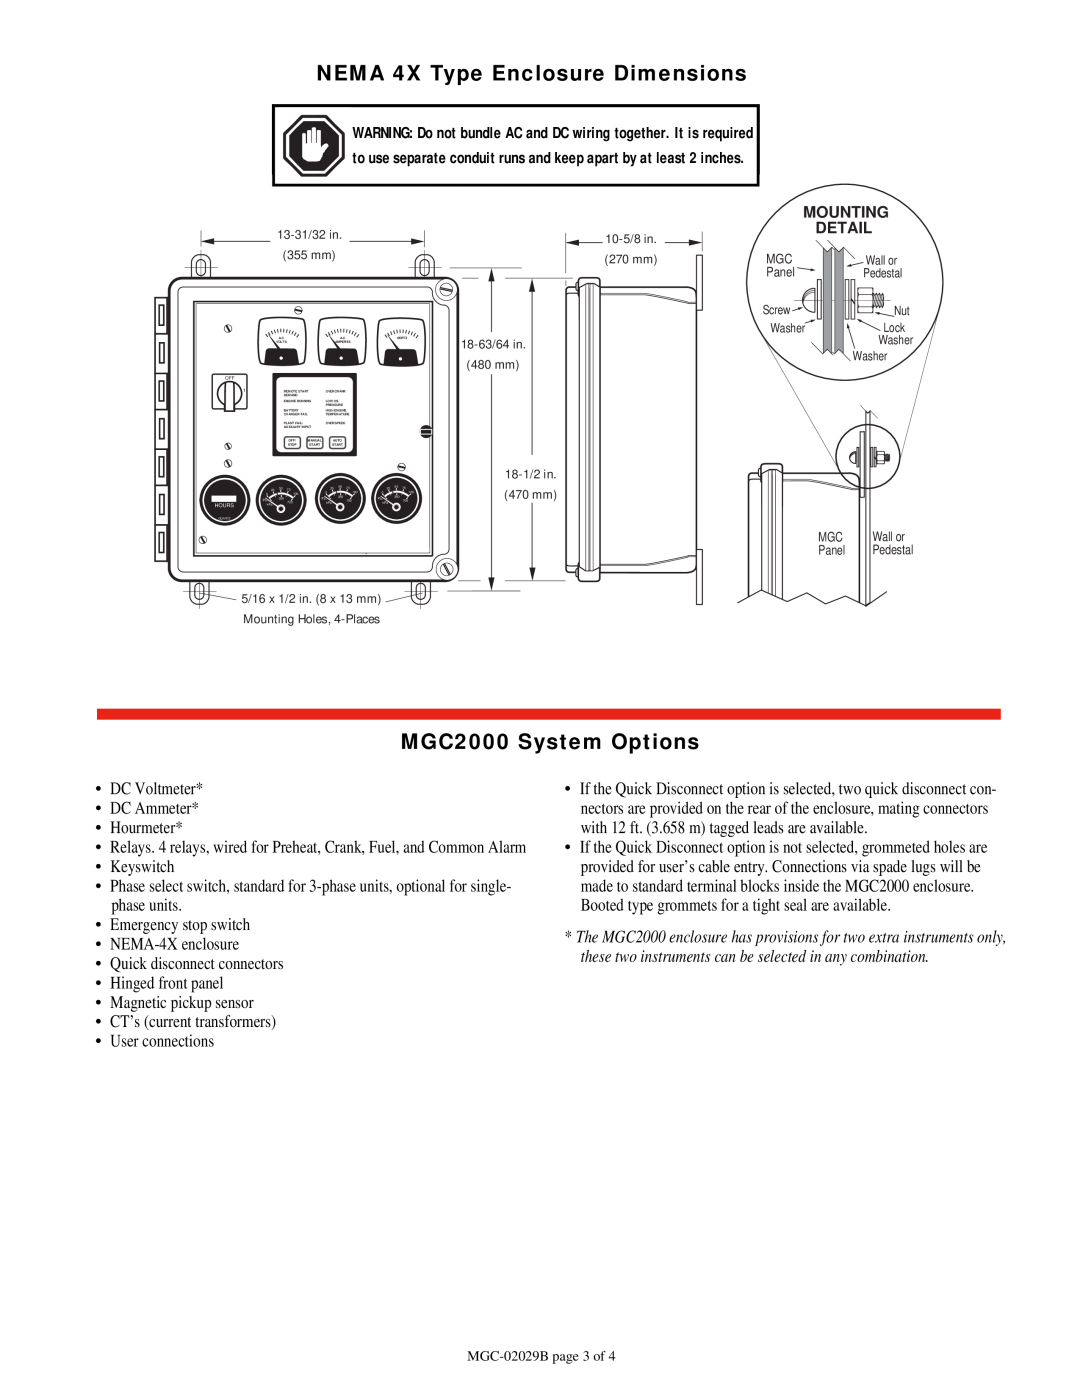 Murphy NEMA 4X Type Enclosure Dimensions, MGC2000 System Options, DC Voltmeter DC Ammeter Hourmeter, Keyswitch, Detail 